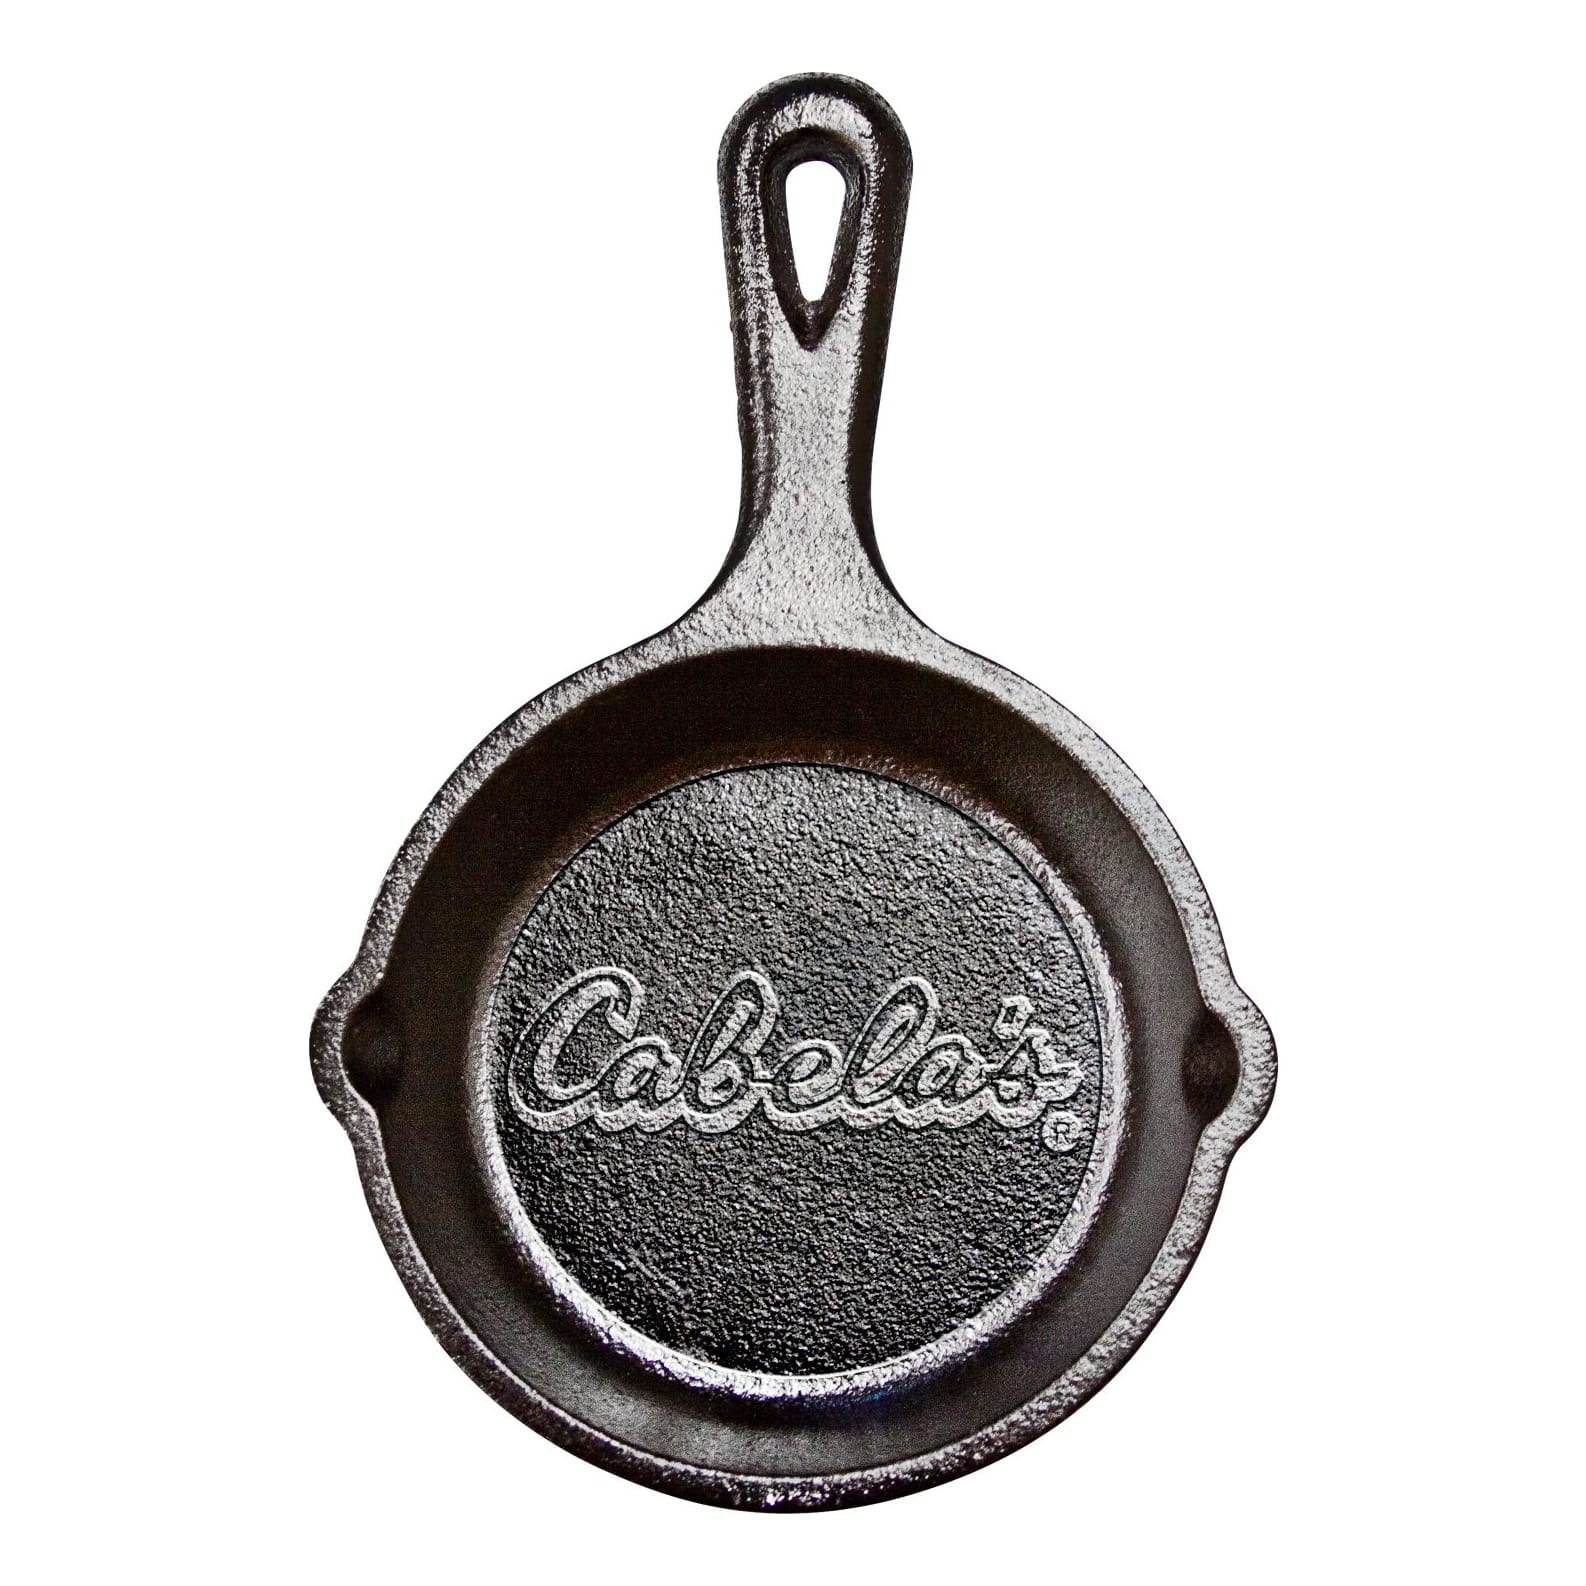 Lodge® Cabela's® Cast Iron Mini Skillet